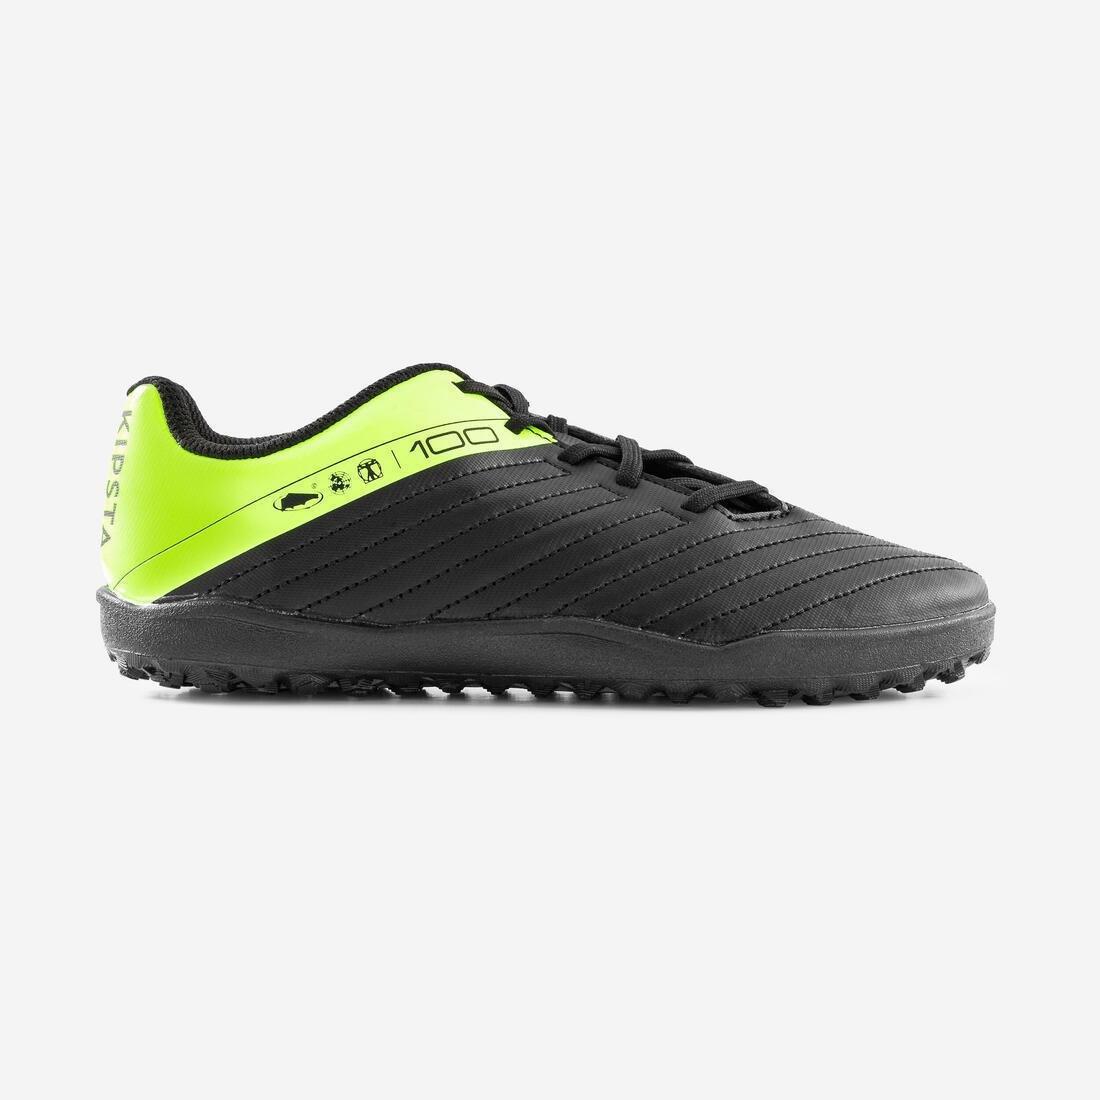 KIPSTA - Hard Ground Football Boots - Agility 100 Hg, Yellow